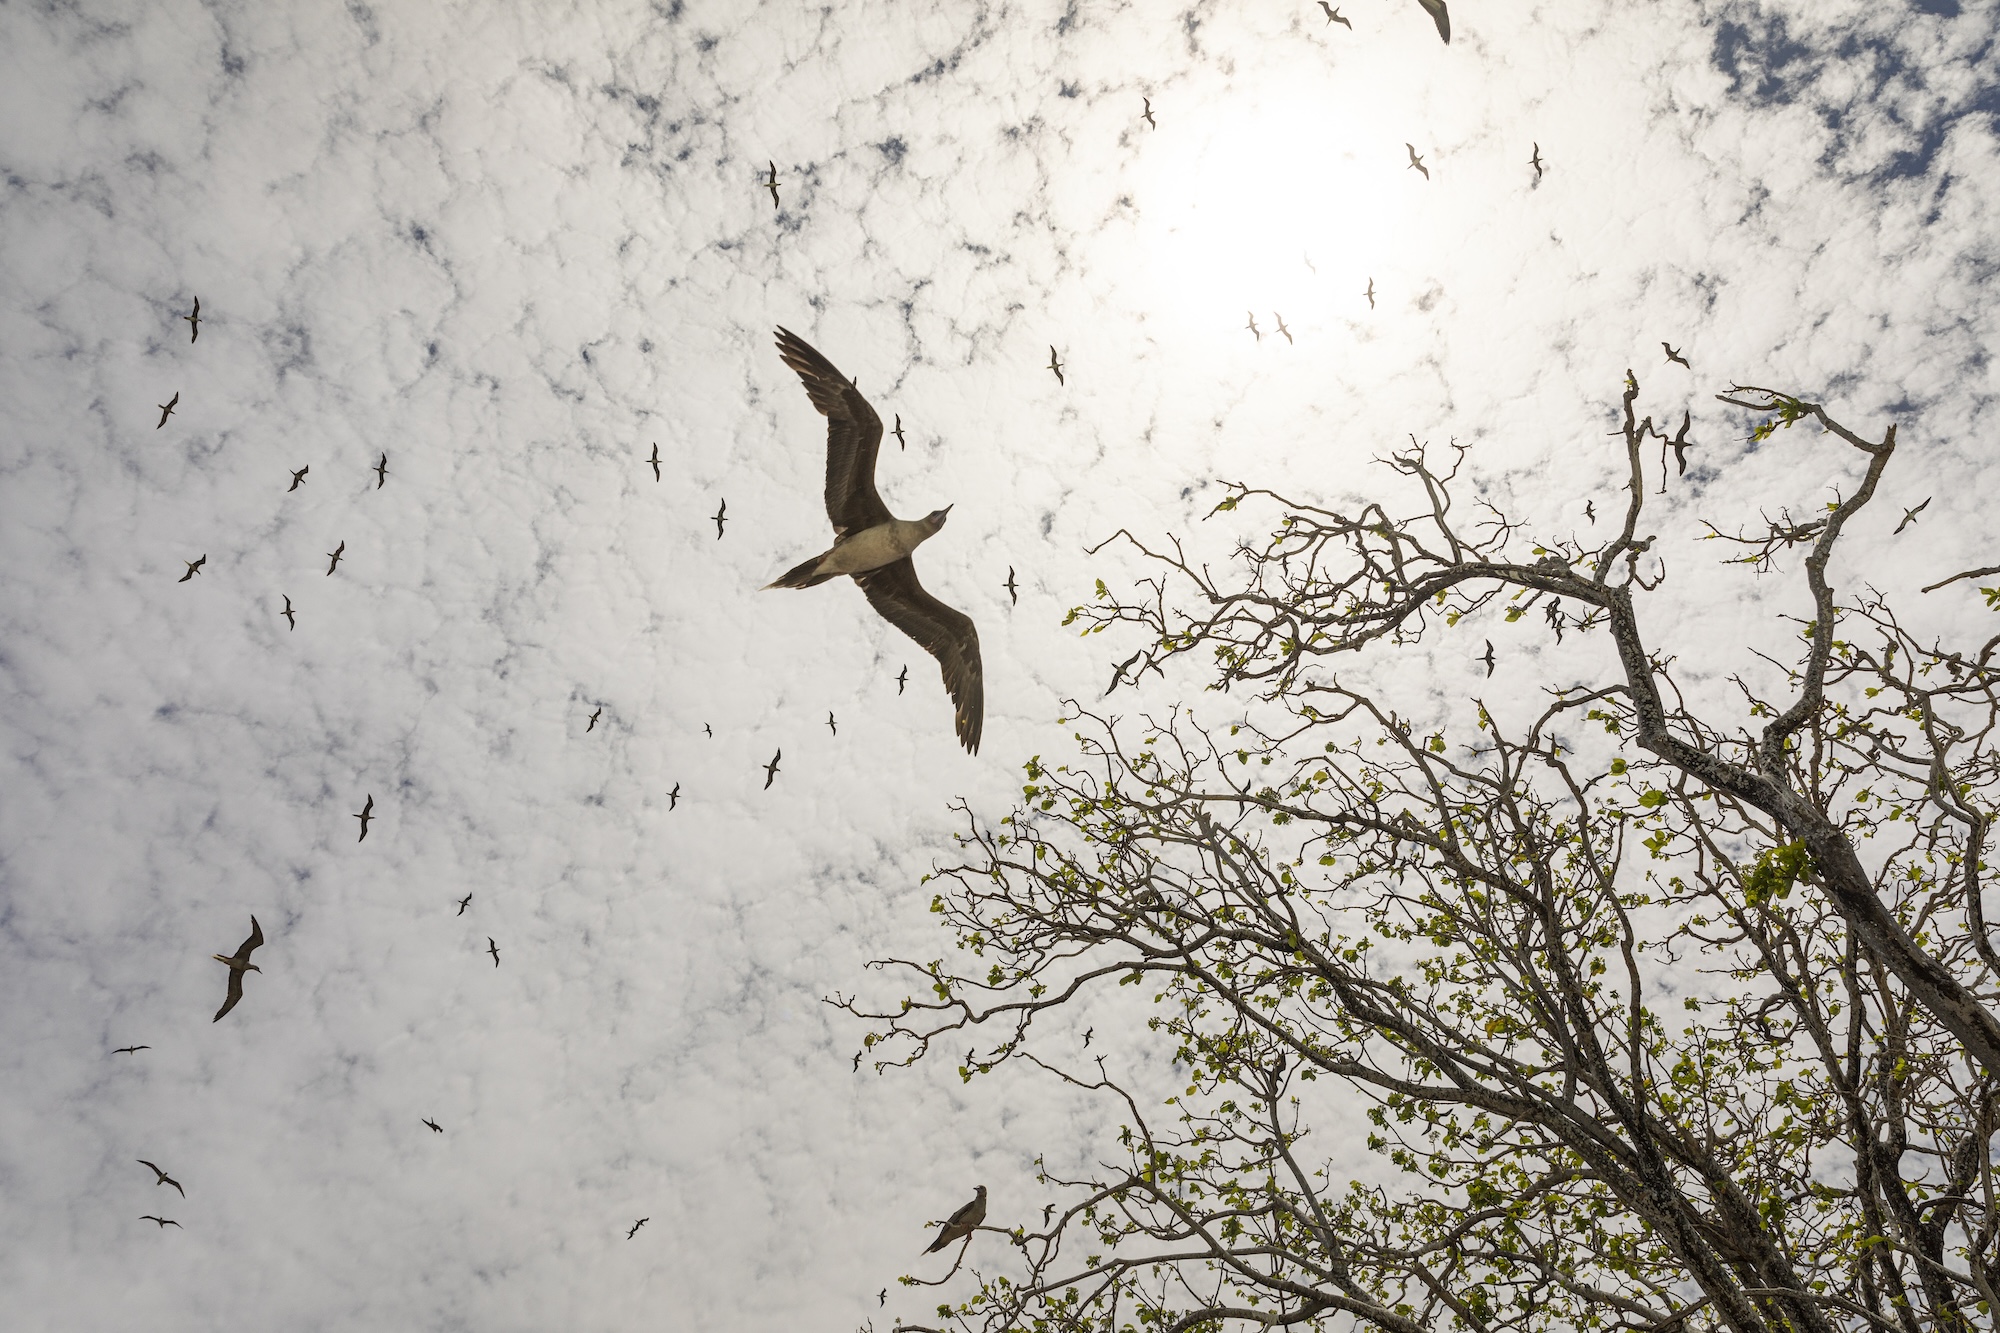 birds flying overhead